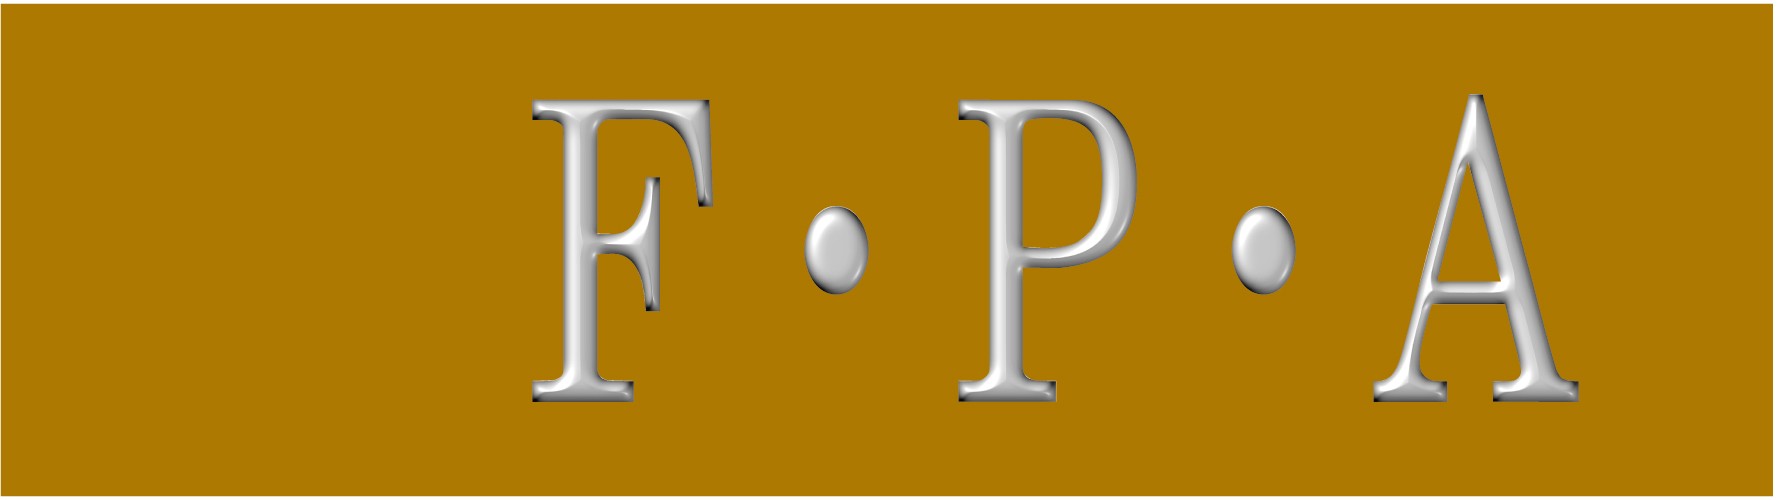 Fpa Financial Corporation Pte. Ltd. logo